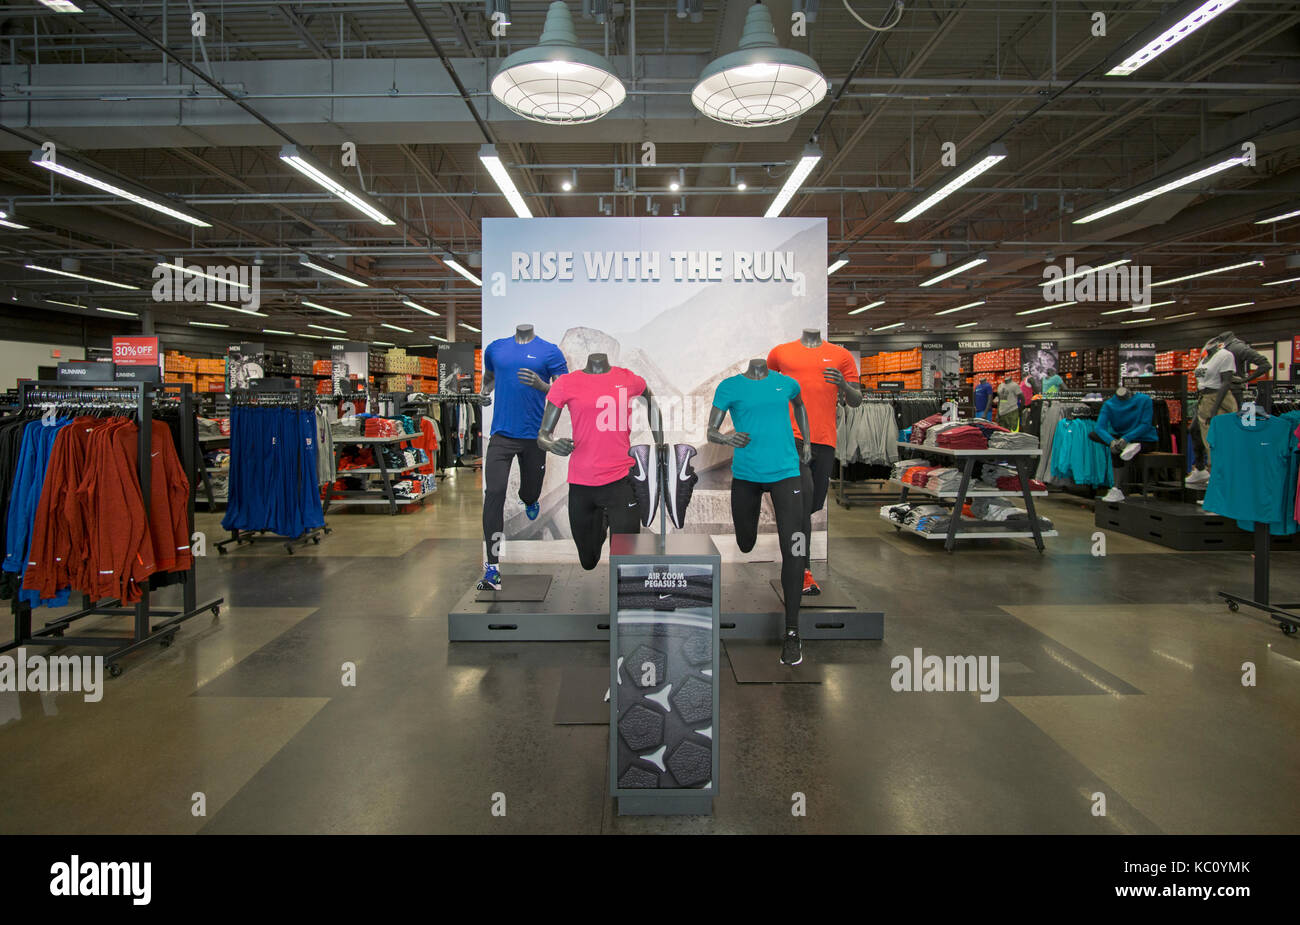 Nike factory fotografías e imágenes de alta resolución - Alamy